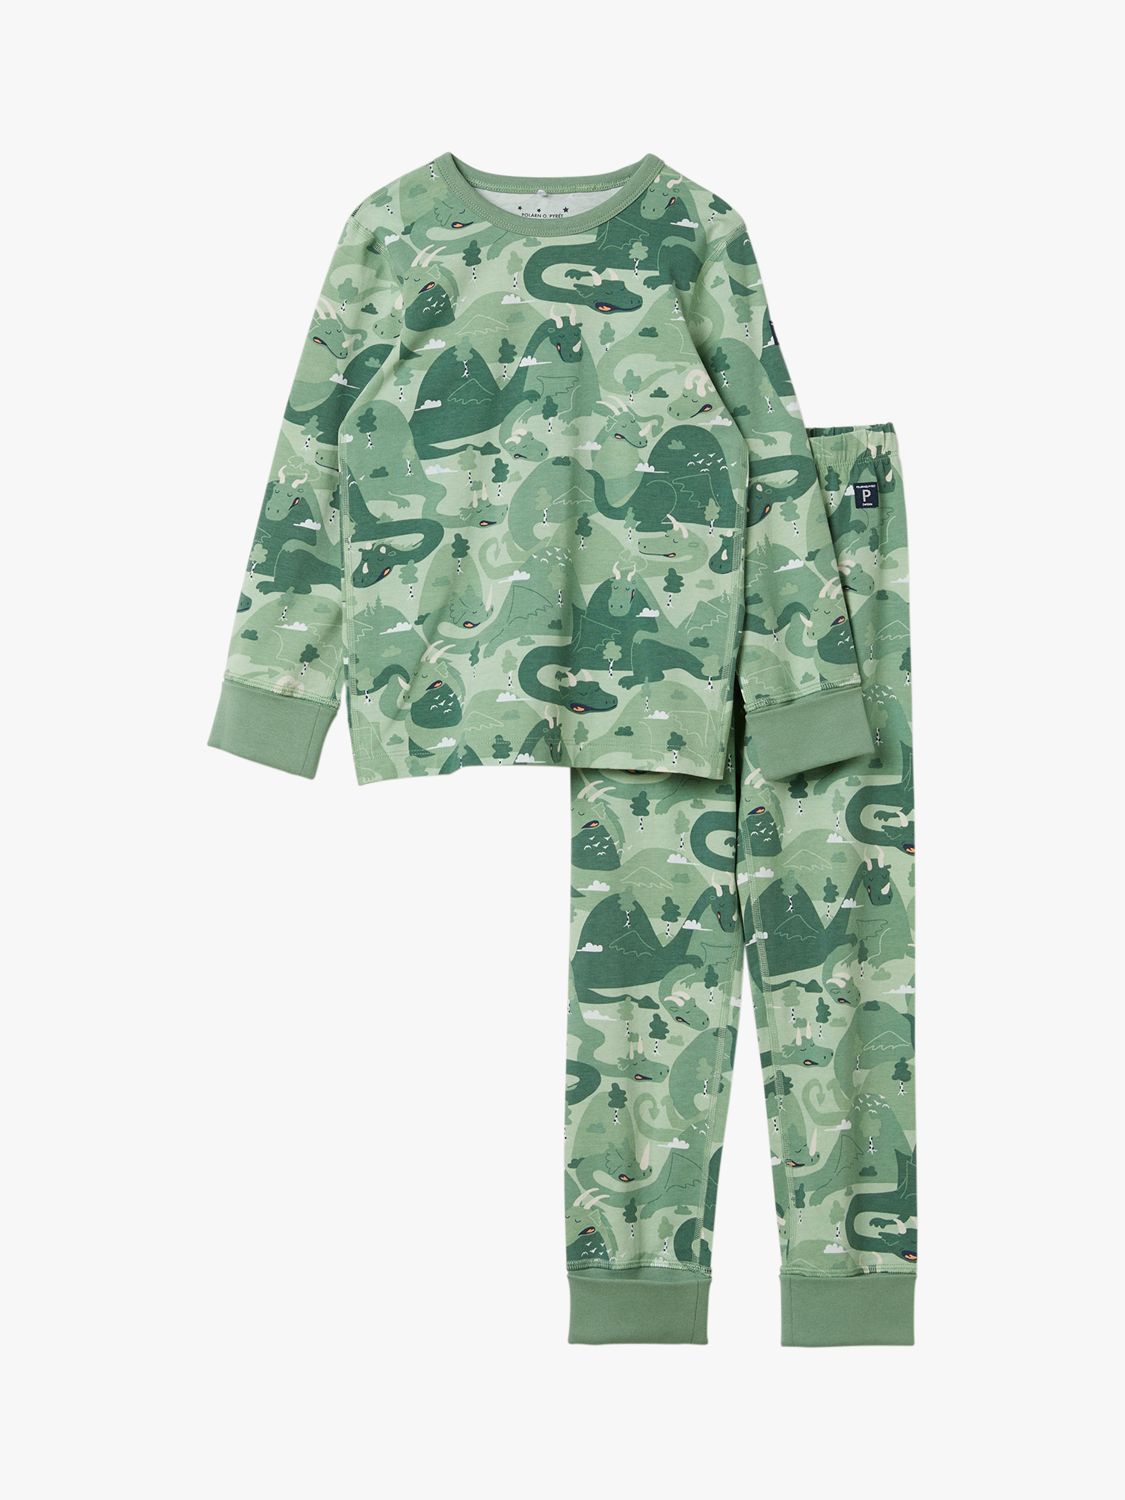 Polarn O. Pyret Kids' Organic Cotton Dragon Print Pyjamas, Green, 1-2 years